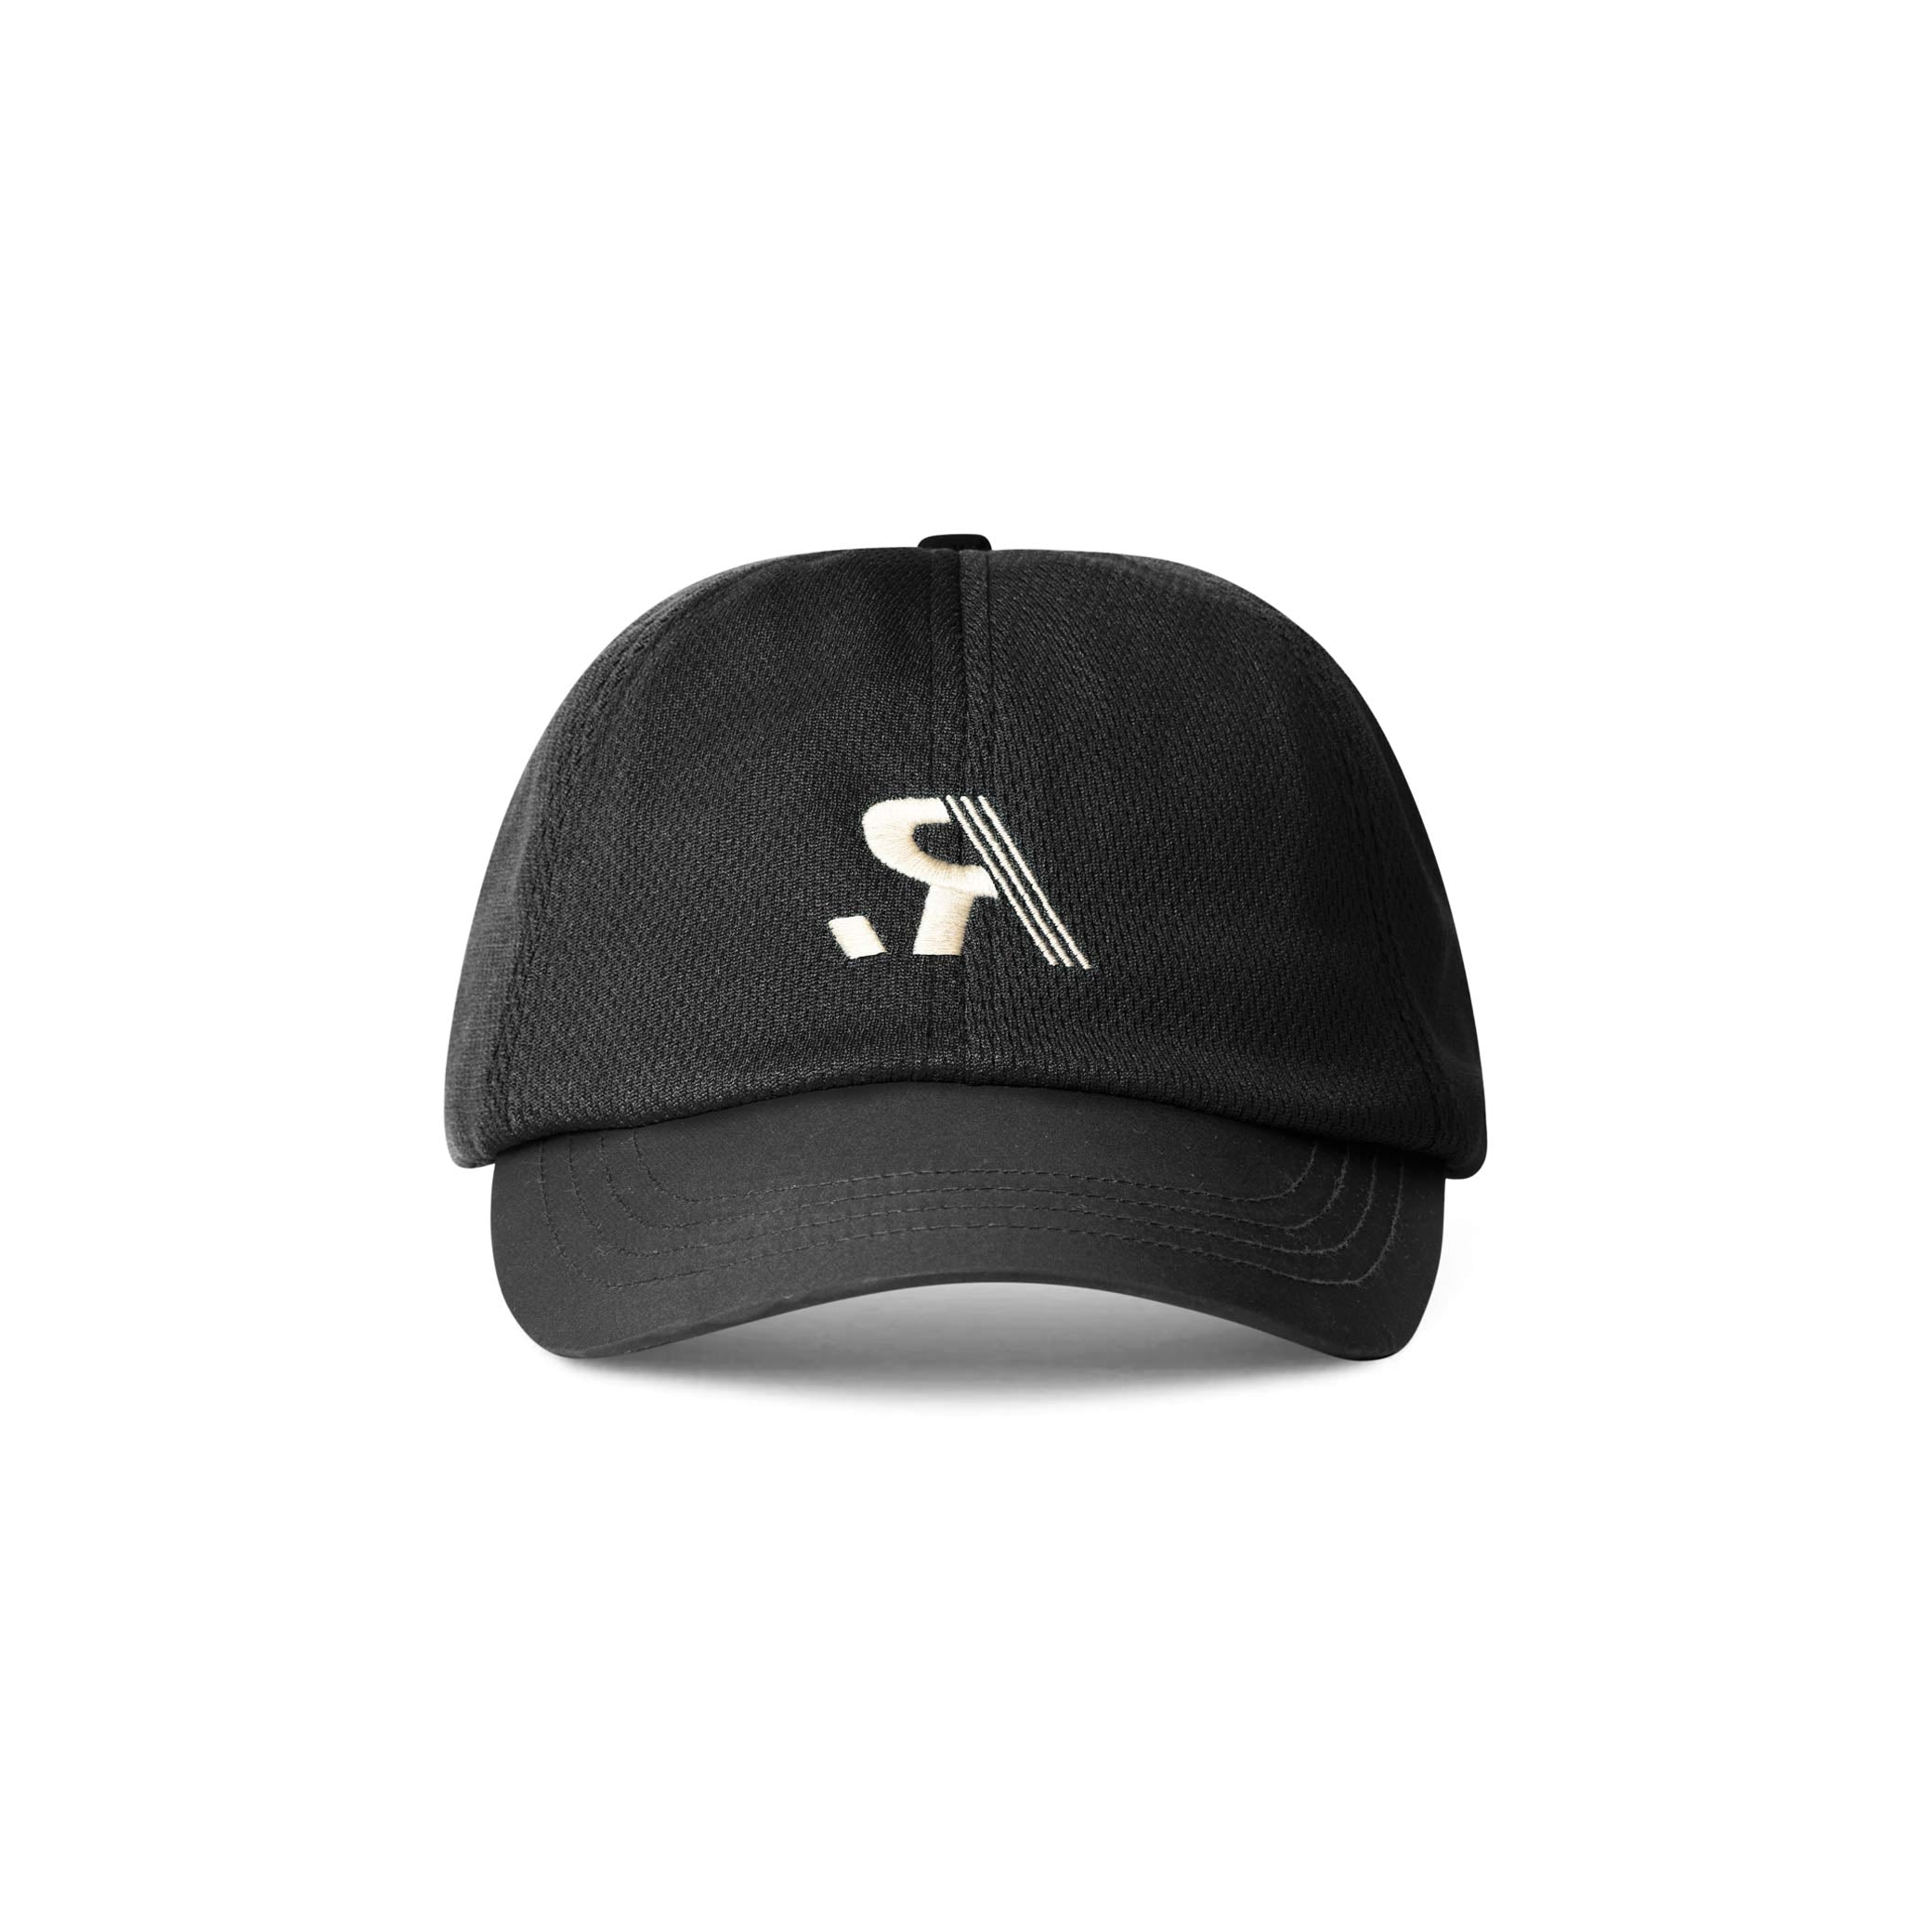 R.SPORT Tennis Hat - Black